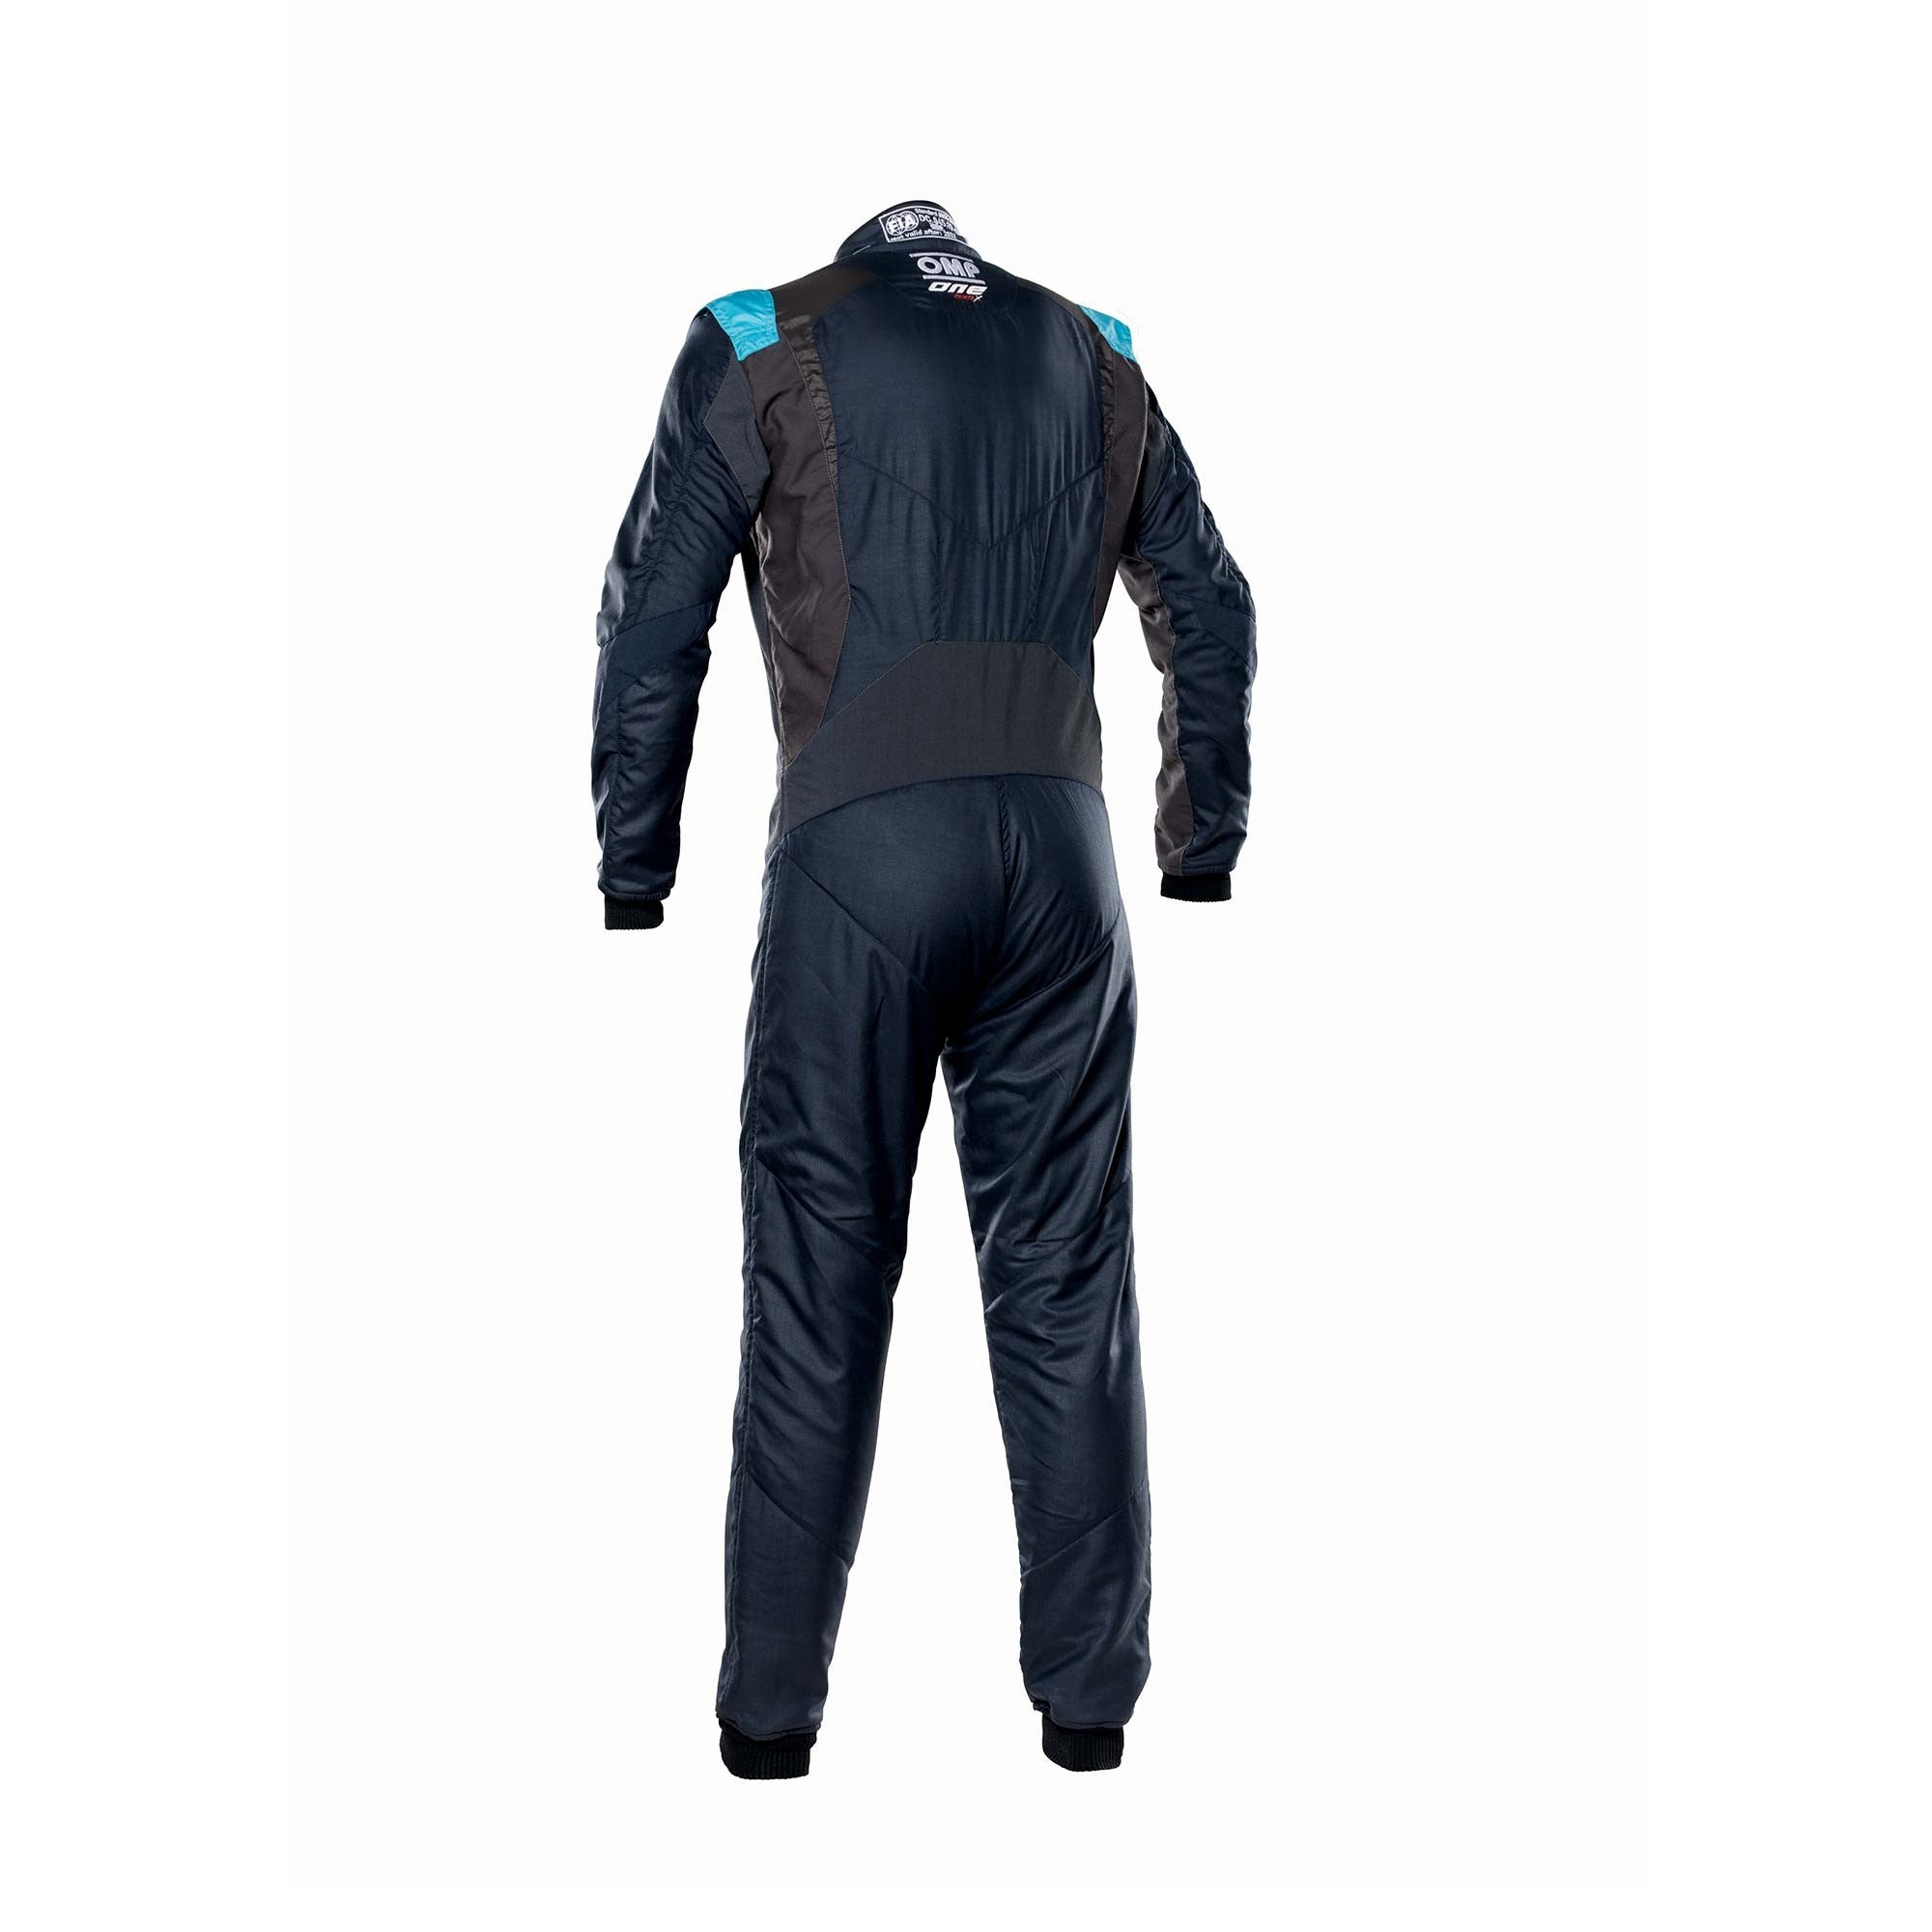 OMP IA0-1861-A01-246-48 Racing suit ONE EVO X, FIA 8856-2018, navy blue/gray/cyan, size 48 Photo-1 